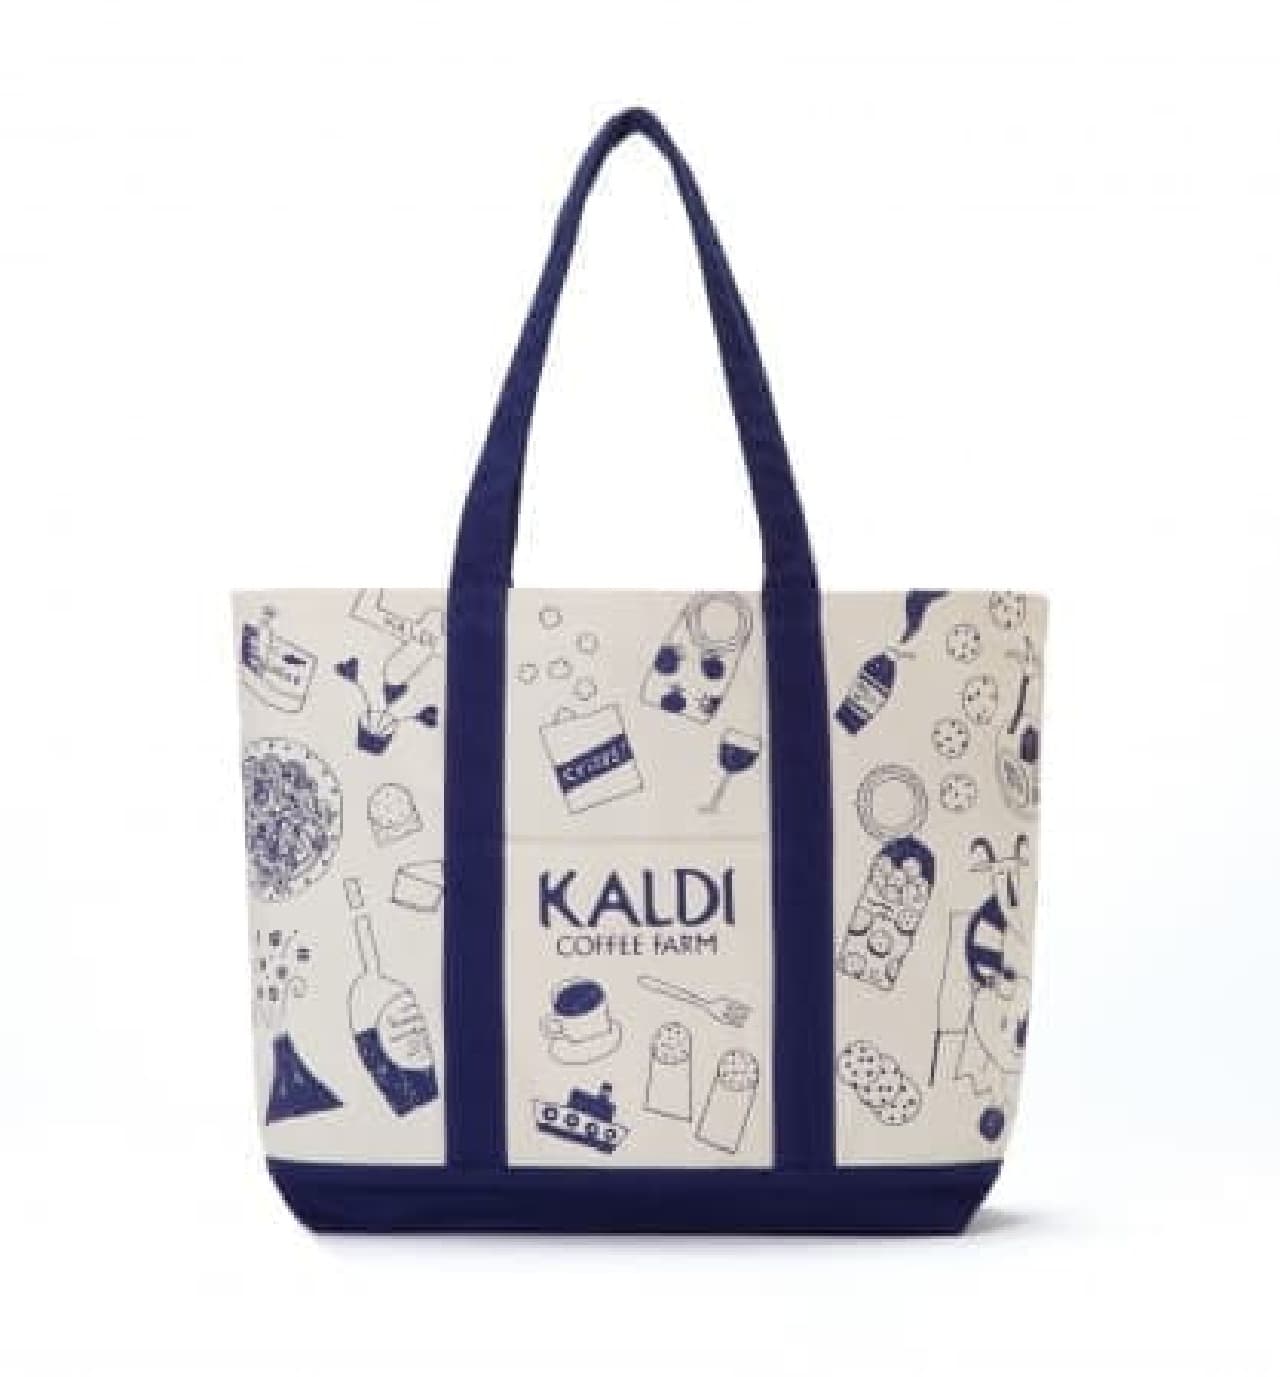 2018 lucky bag from KALDI